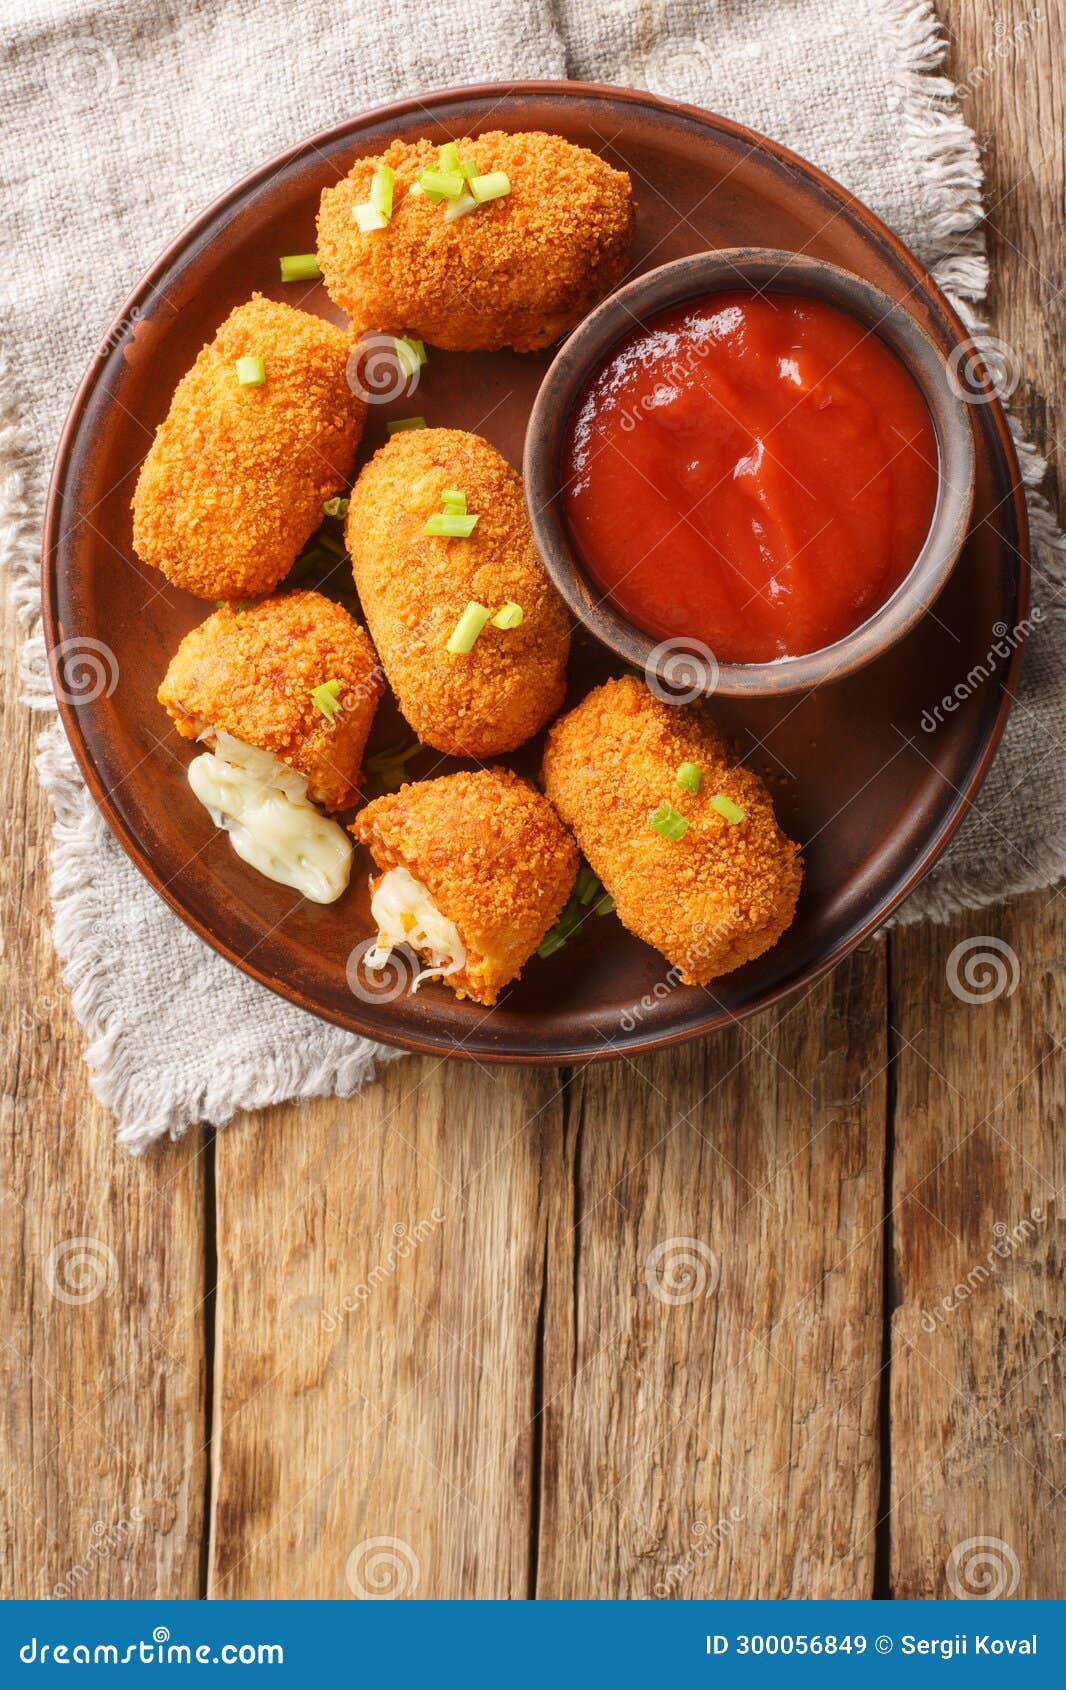 suppli al telefono italian fast food fried tomato rice croquettes stuffed with mozzarella closeup on the plate. vertical top view